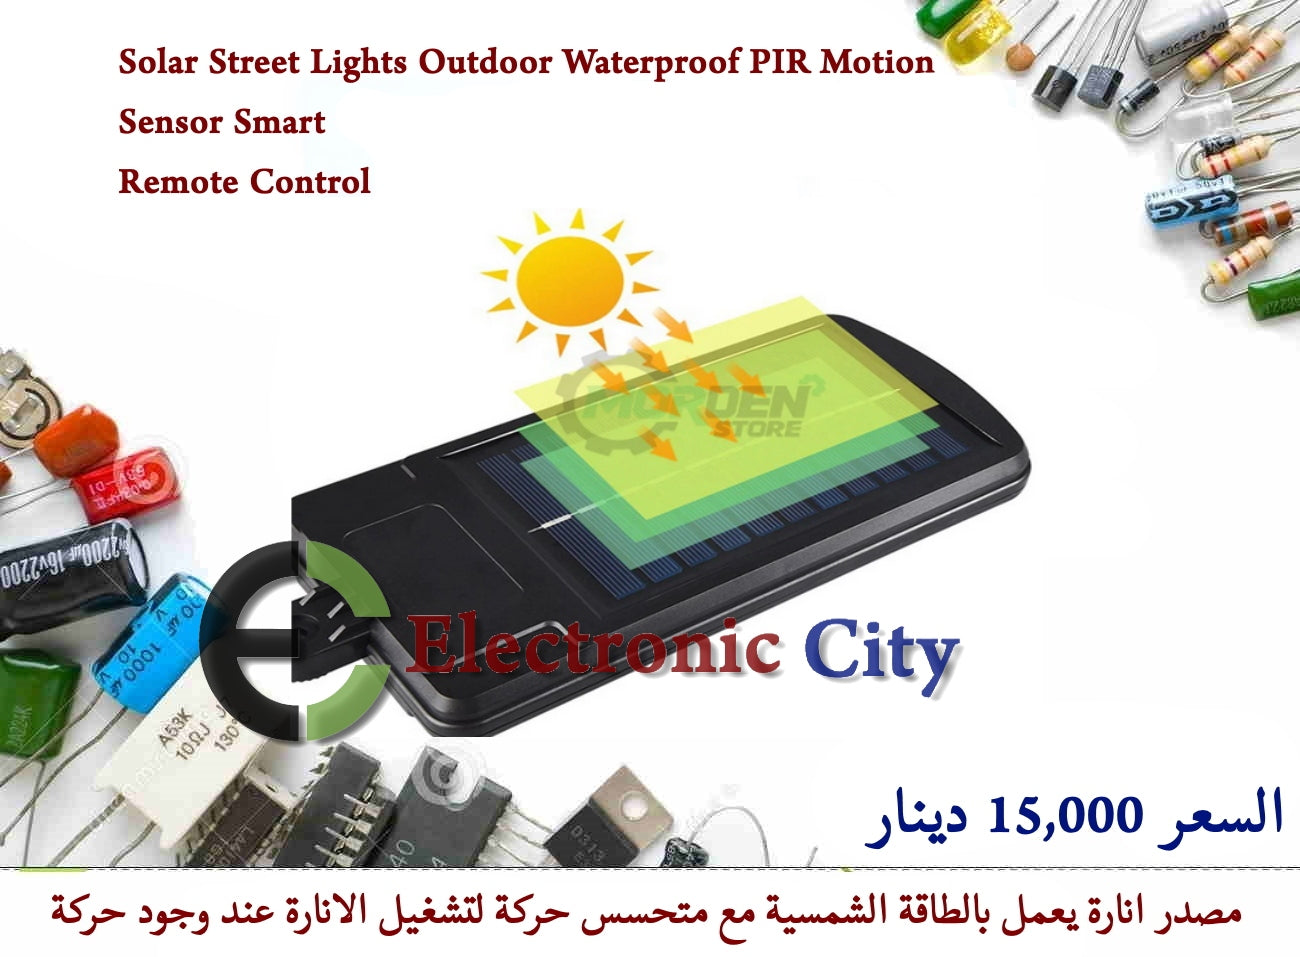 Solar Street Lights Outdoor Waterproof PIR Motion Sensor Smart Remote Control